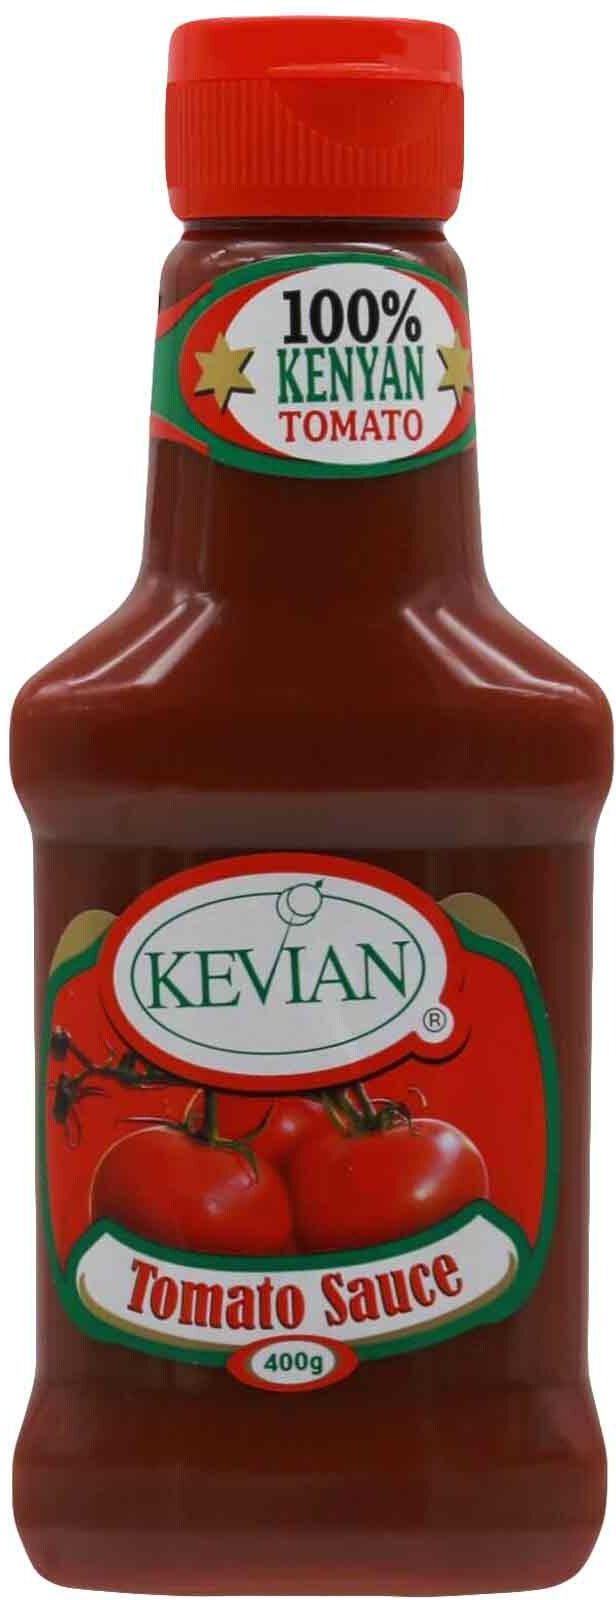 Kevian Tomato Sauce 400g